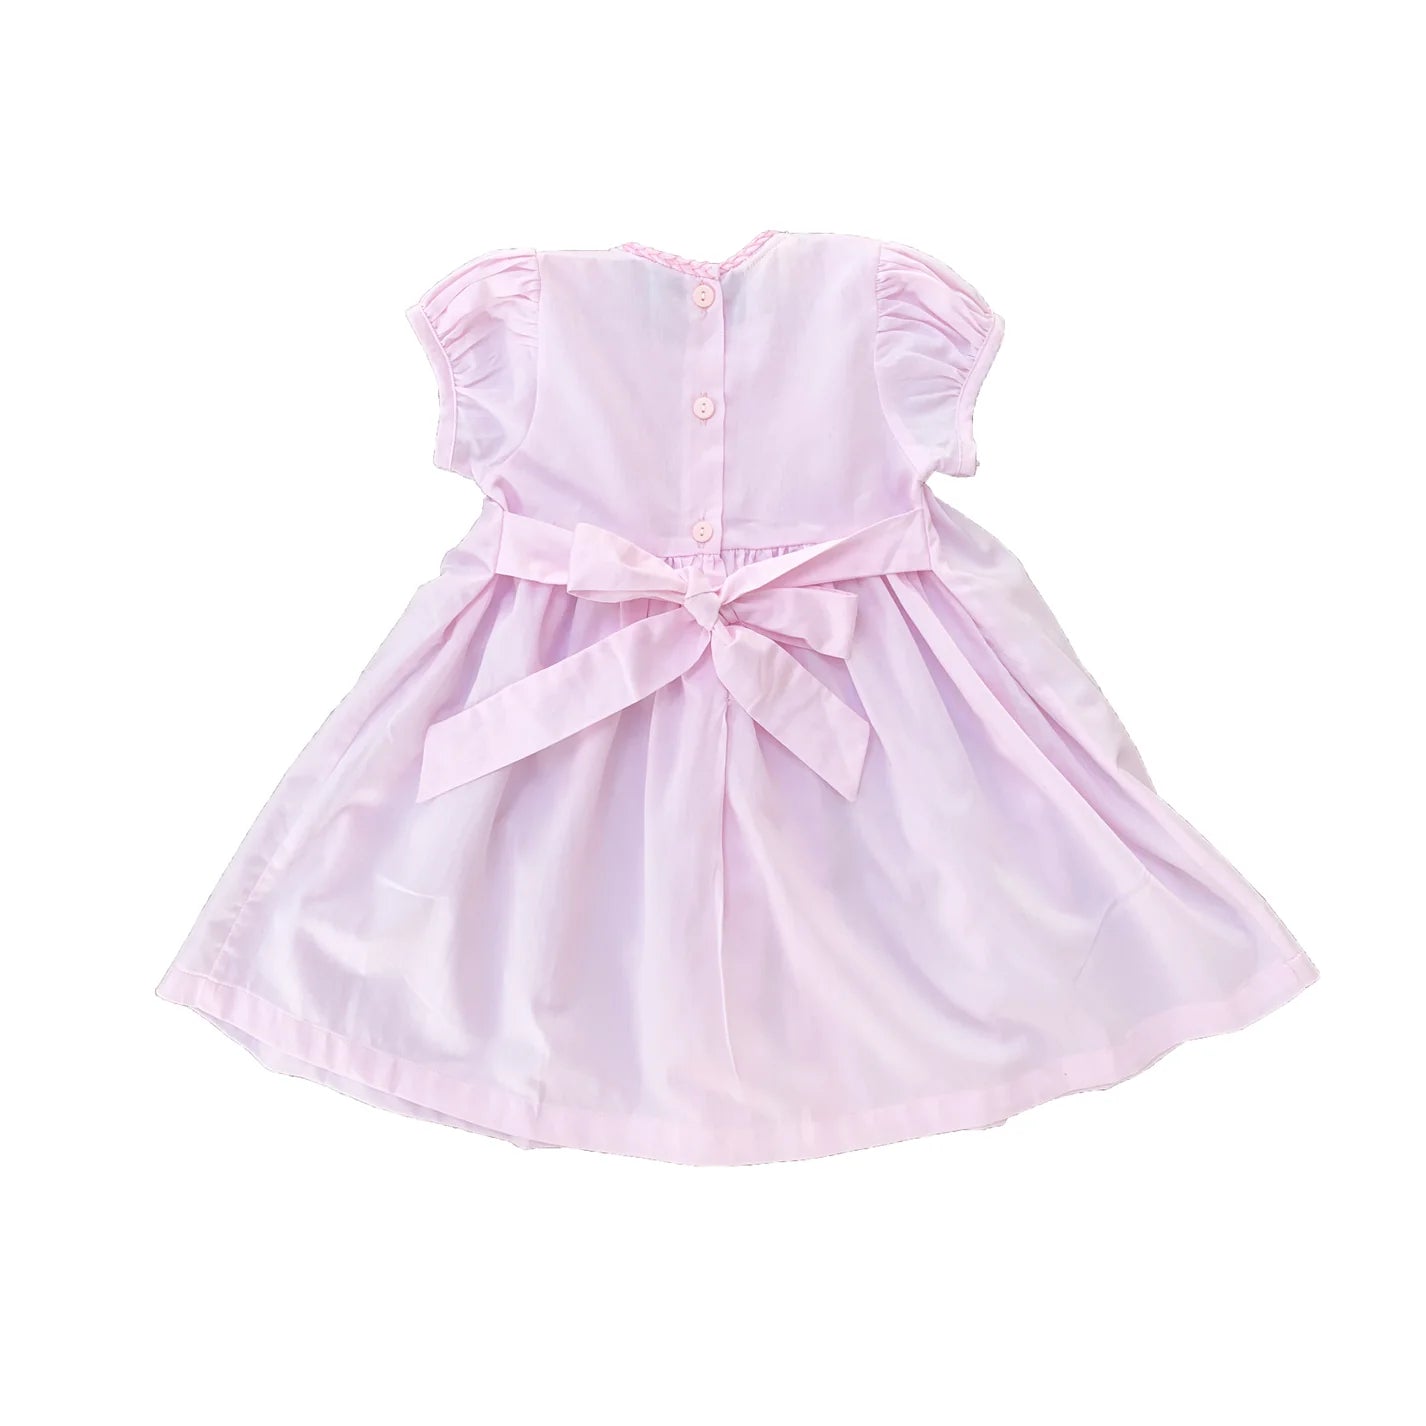 Pale Pink Smocked Dress Size 2